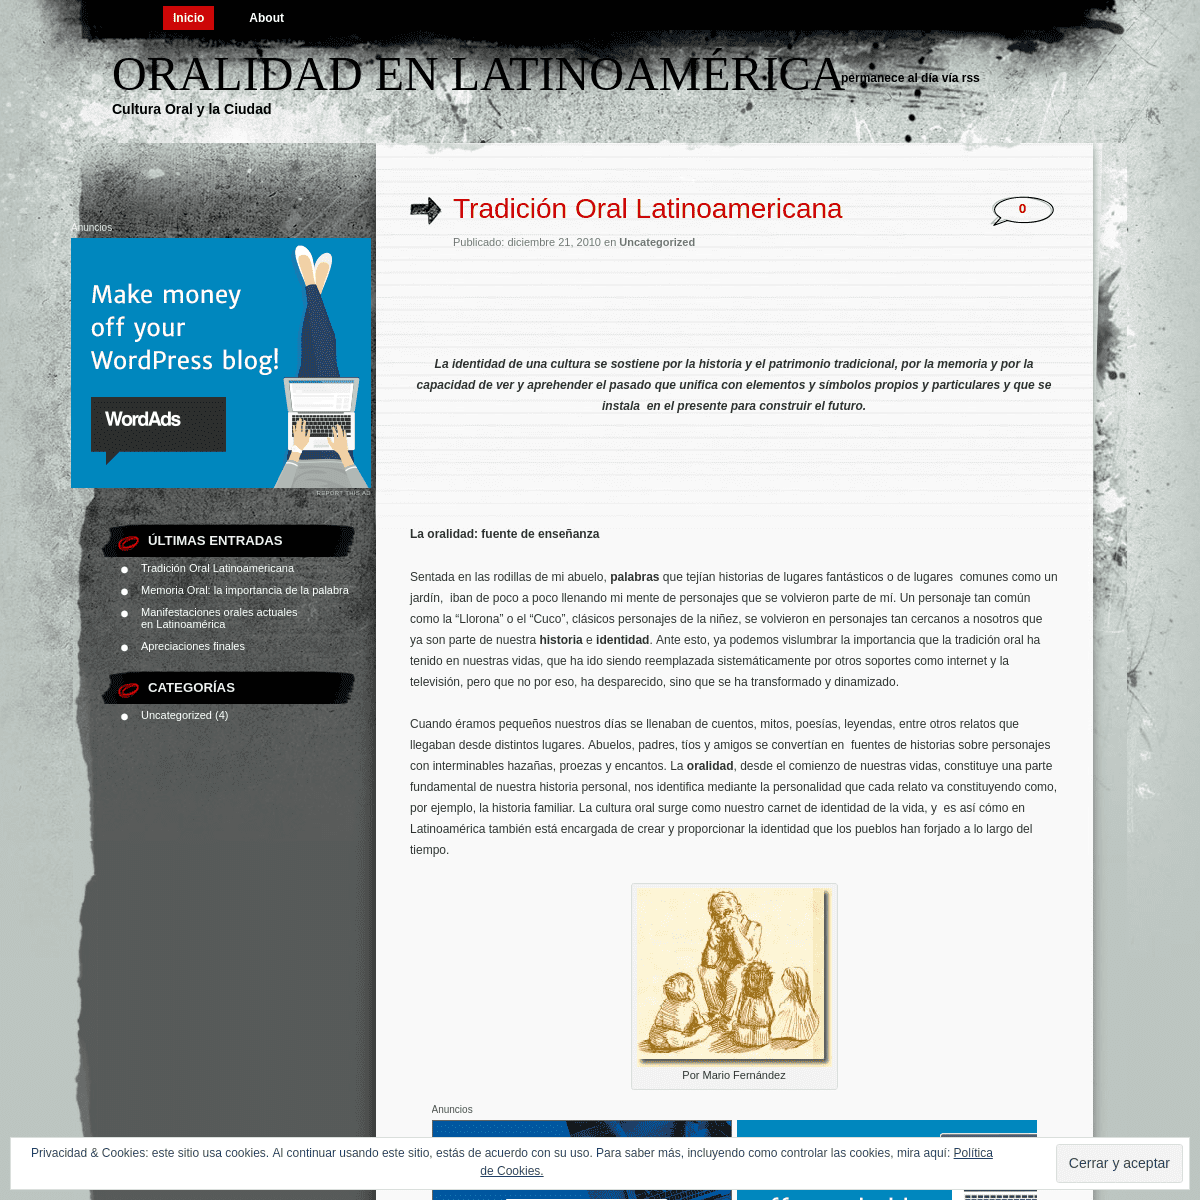 A complete backup of oralidadlatinoamericana.wordpress.com